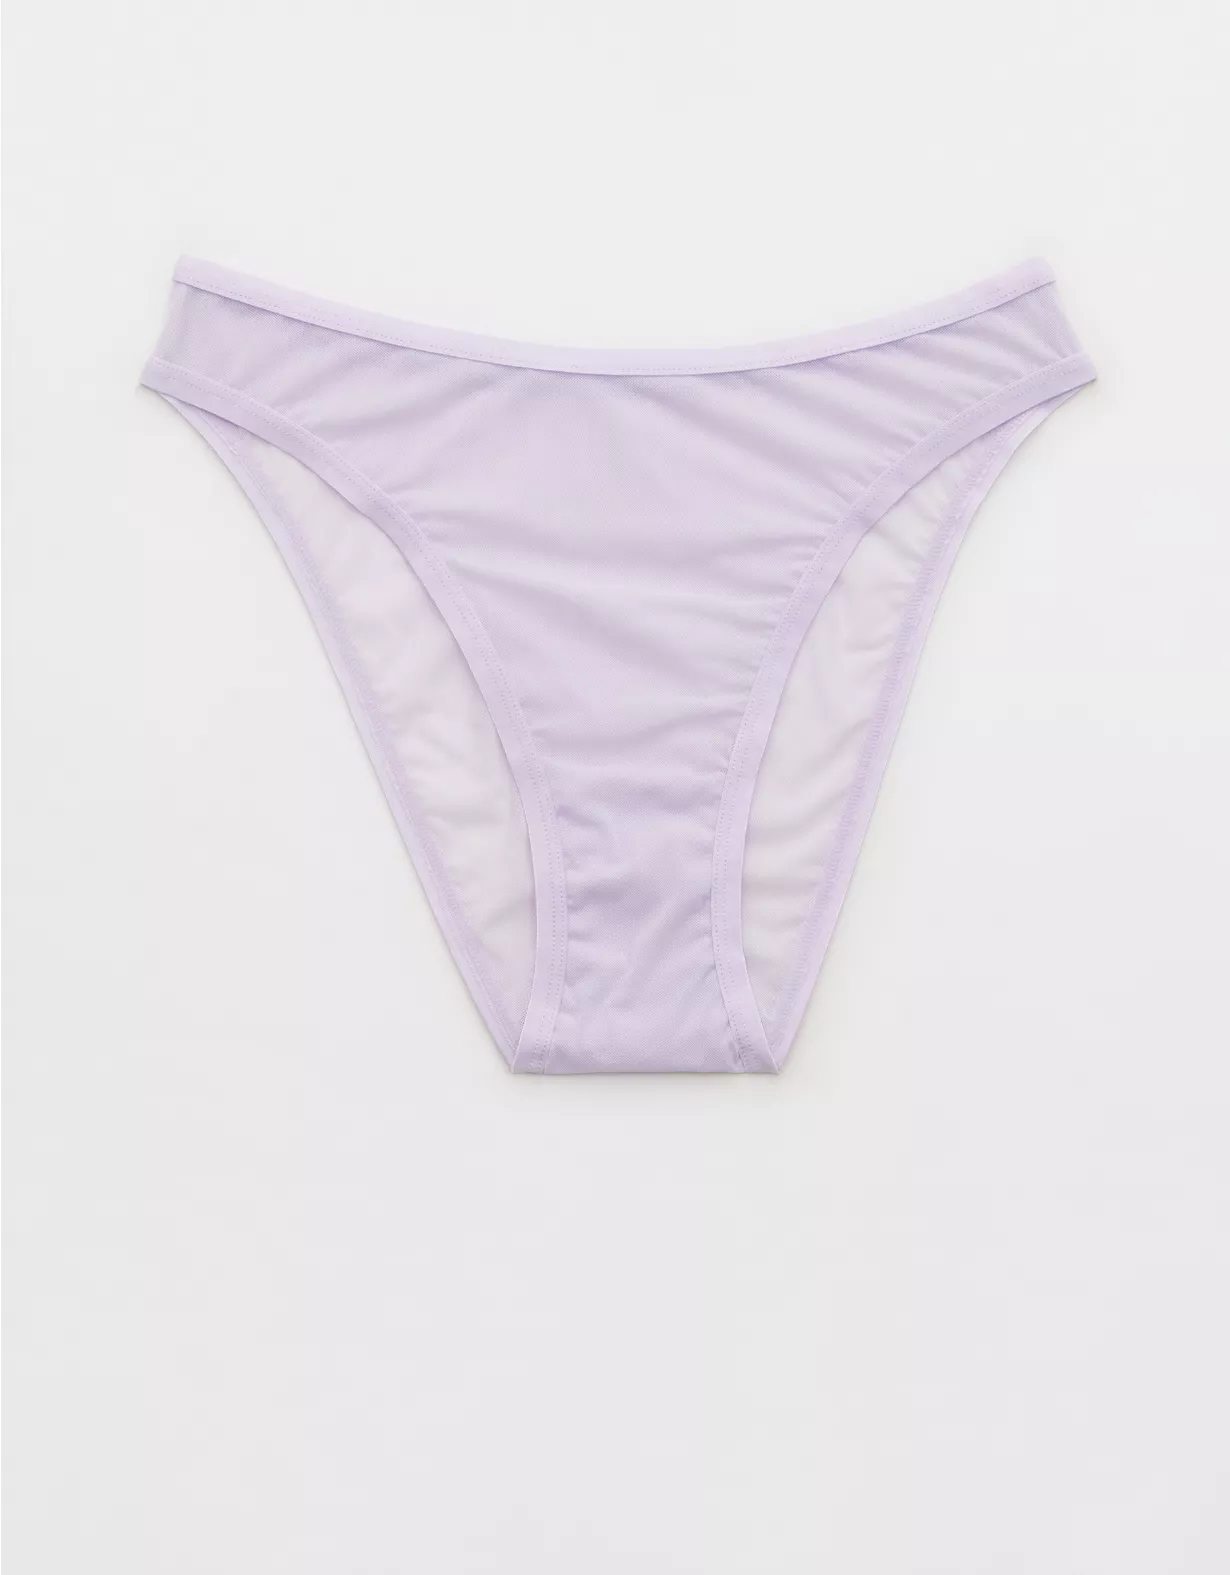 SMOOTHEZ Mesh High Cut Bikini Underwear